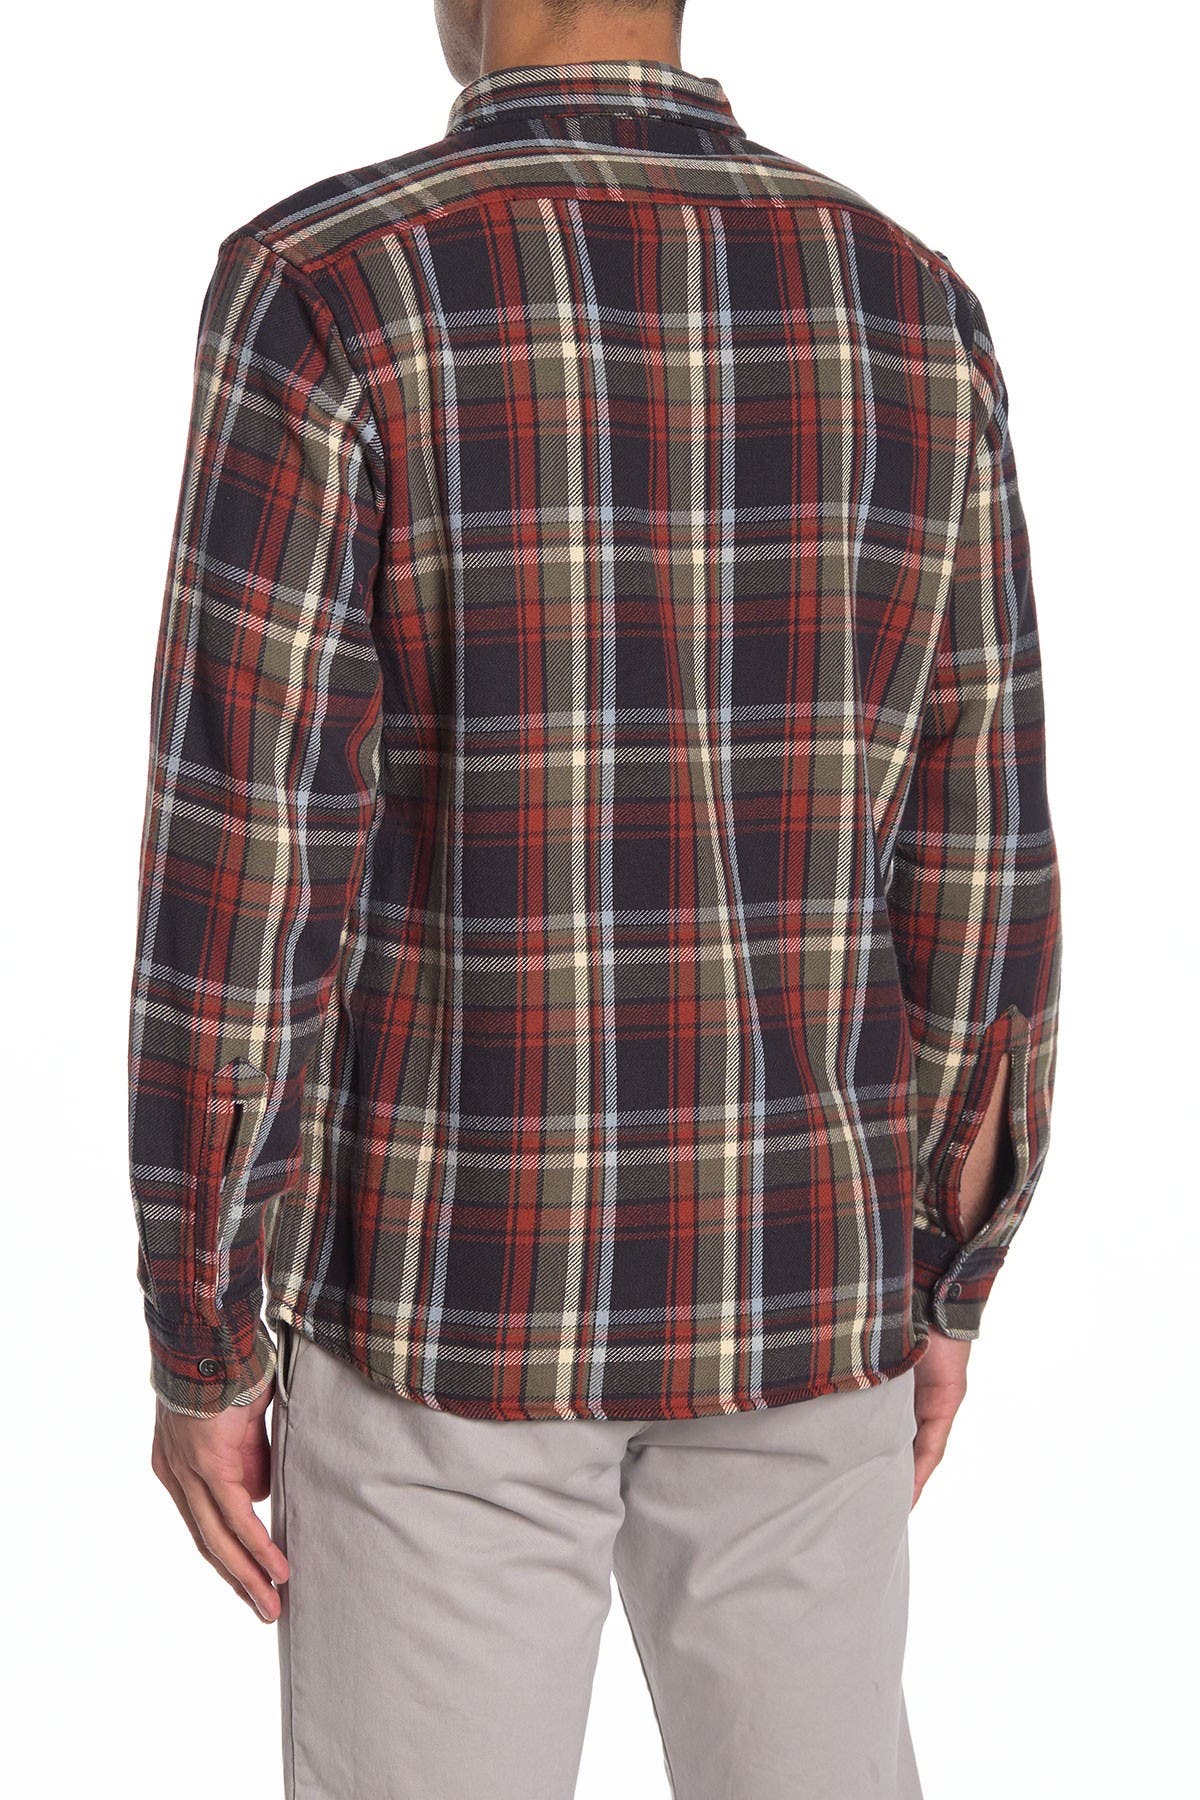 Tailor Vintage | Reversible Plaid Casual Fit Shirt | Nordstrom Rack